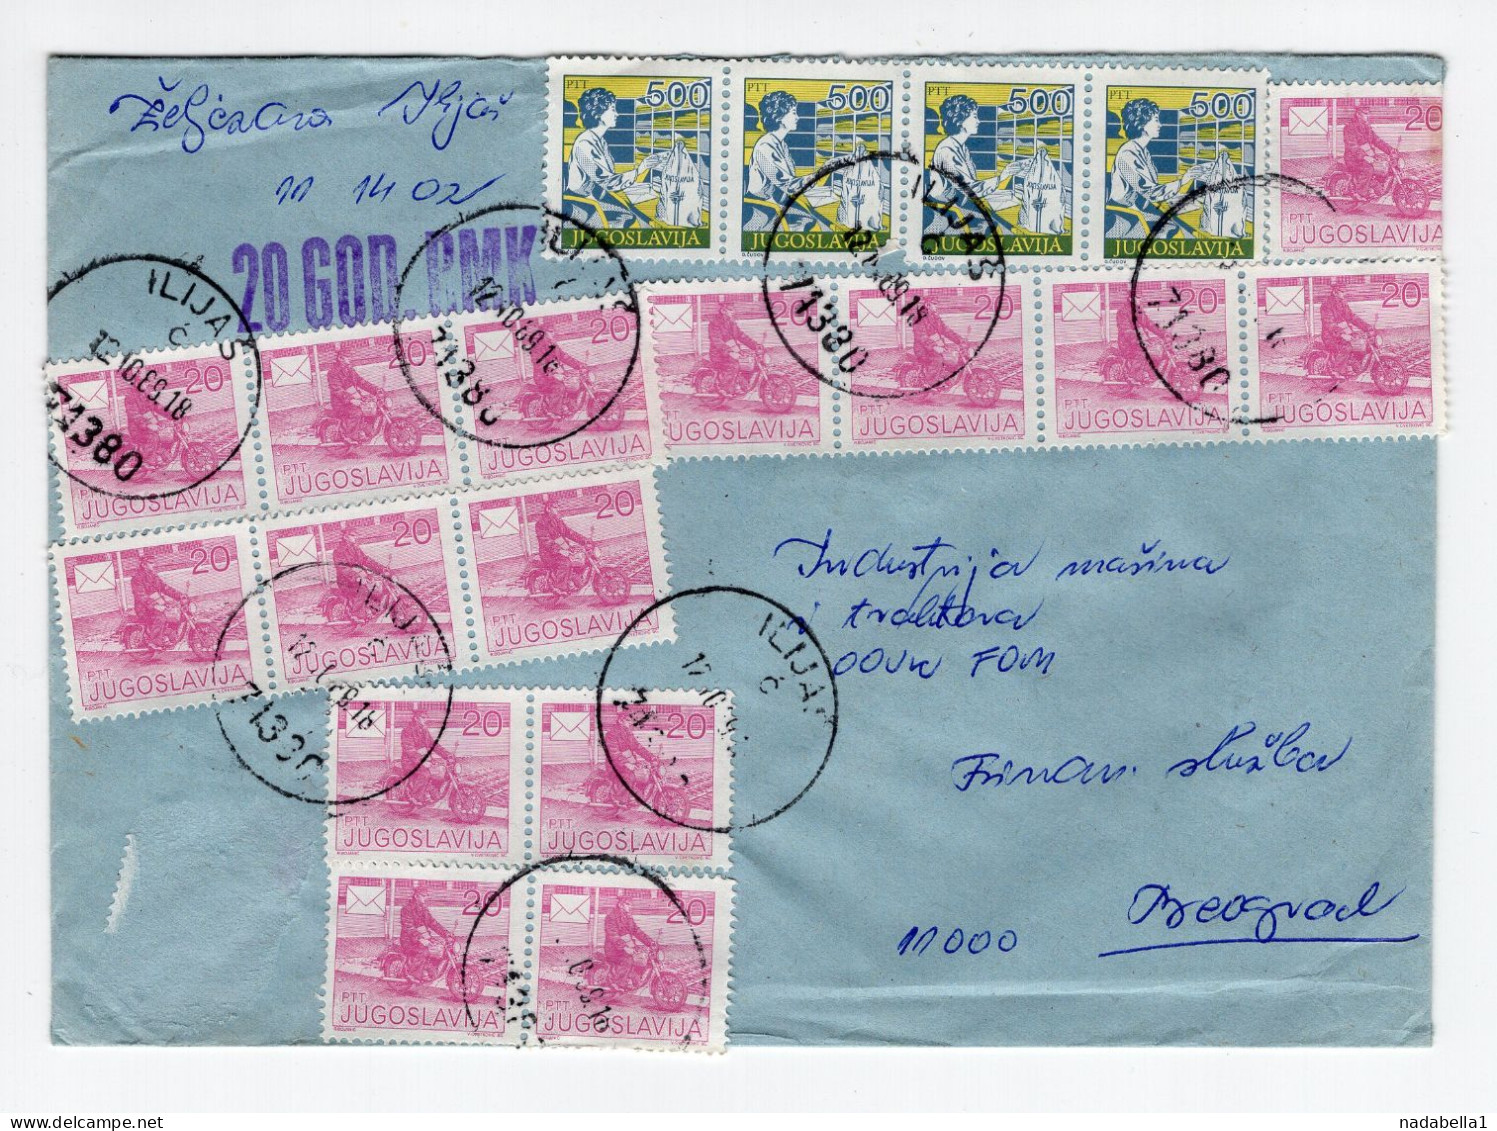 1989. YUGOSLAVIA,BOSNIA,ILIJAS,COVER SENT TO BELGRADE,2300 DIN. FRANKING,INFLATION MAIL - Lettres & Documents